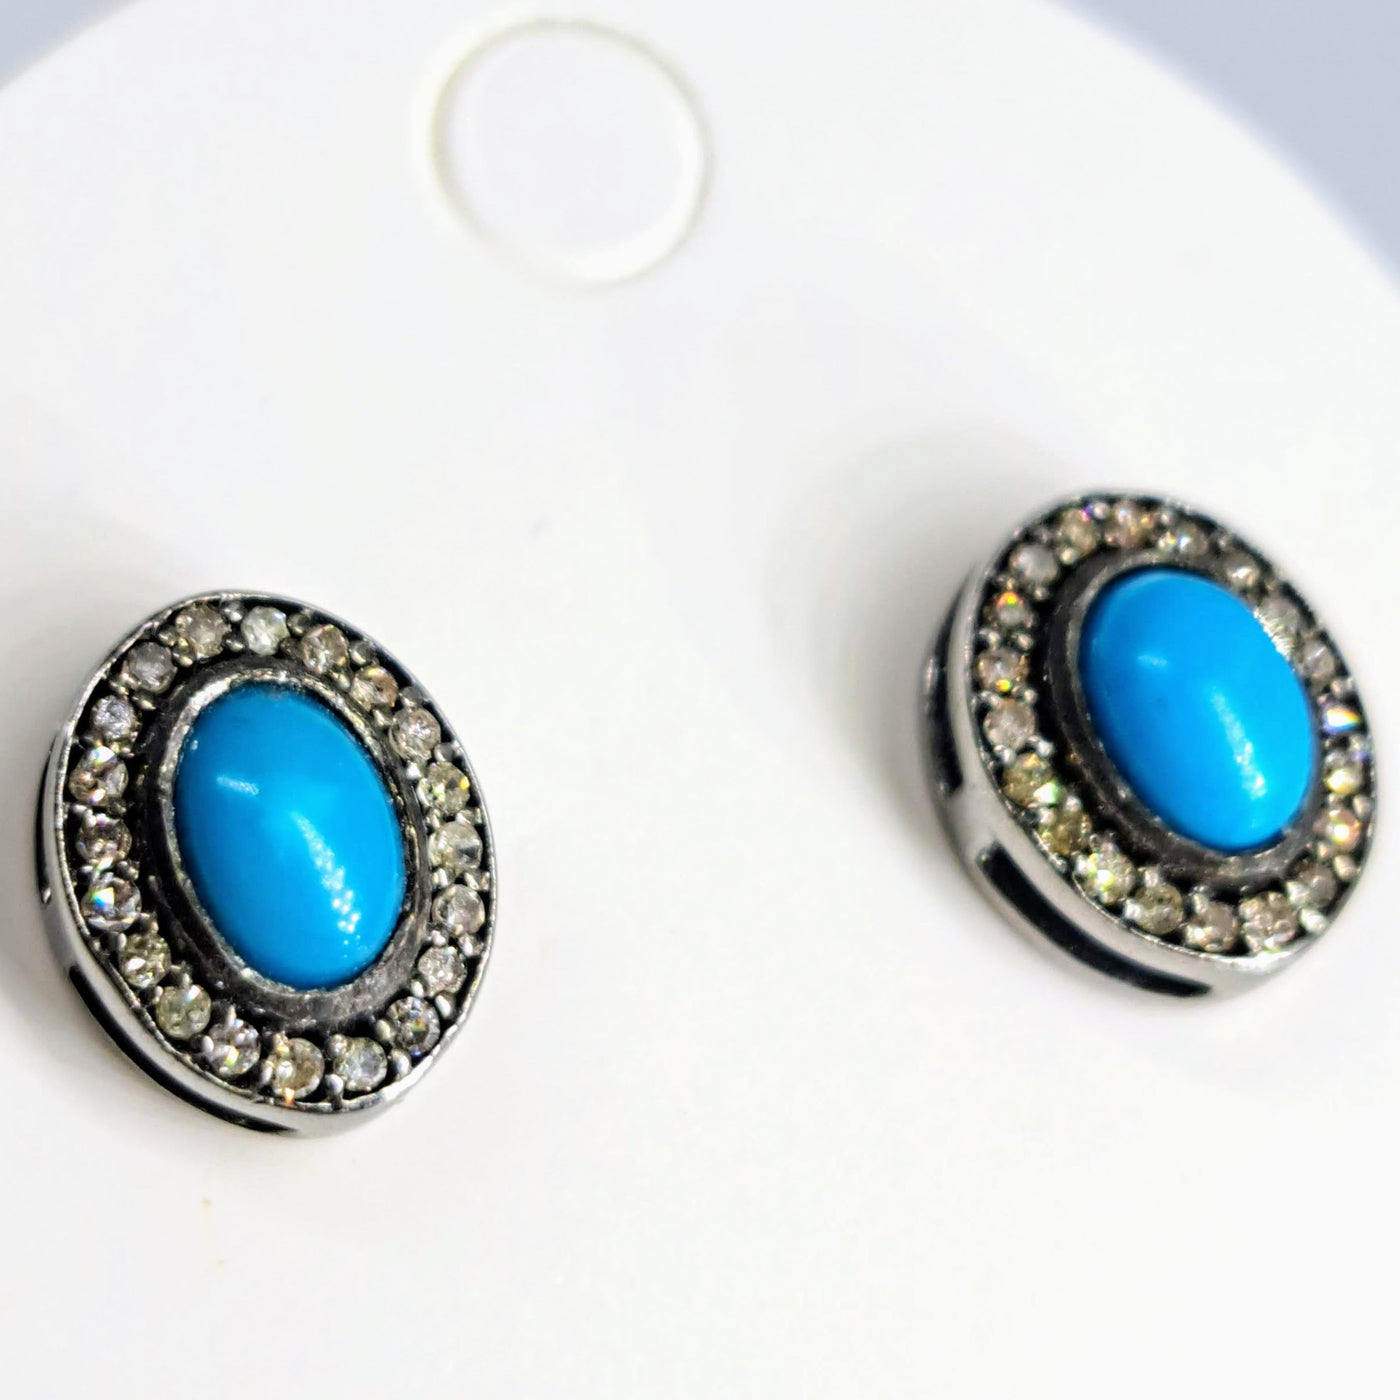 "Sleeping Beauty Studs" 3/8" Earrings - Turquoise, Diamond, Black Sterling